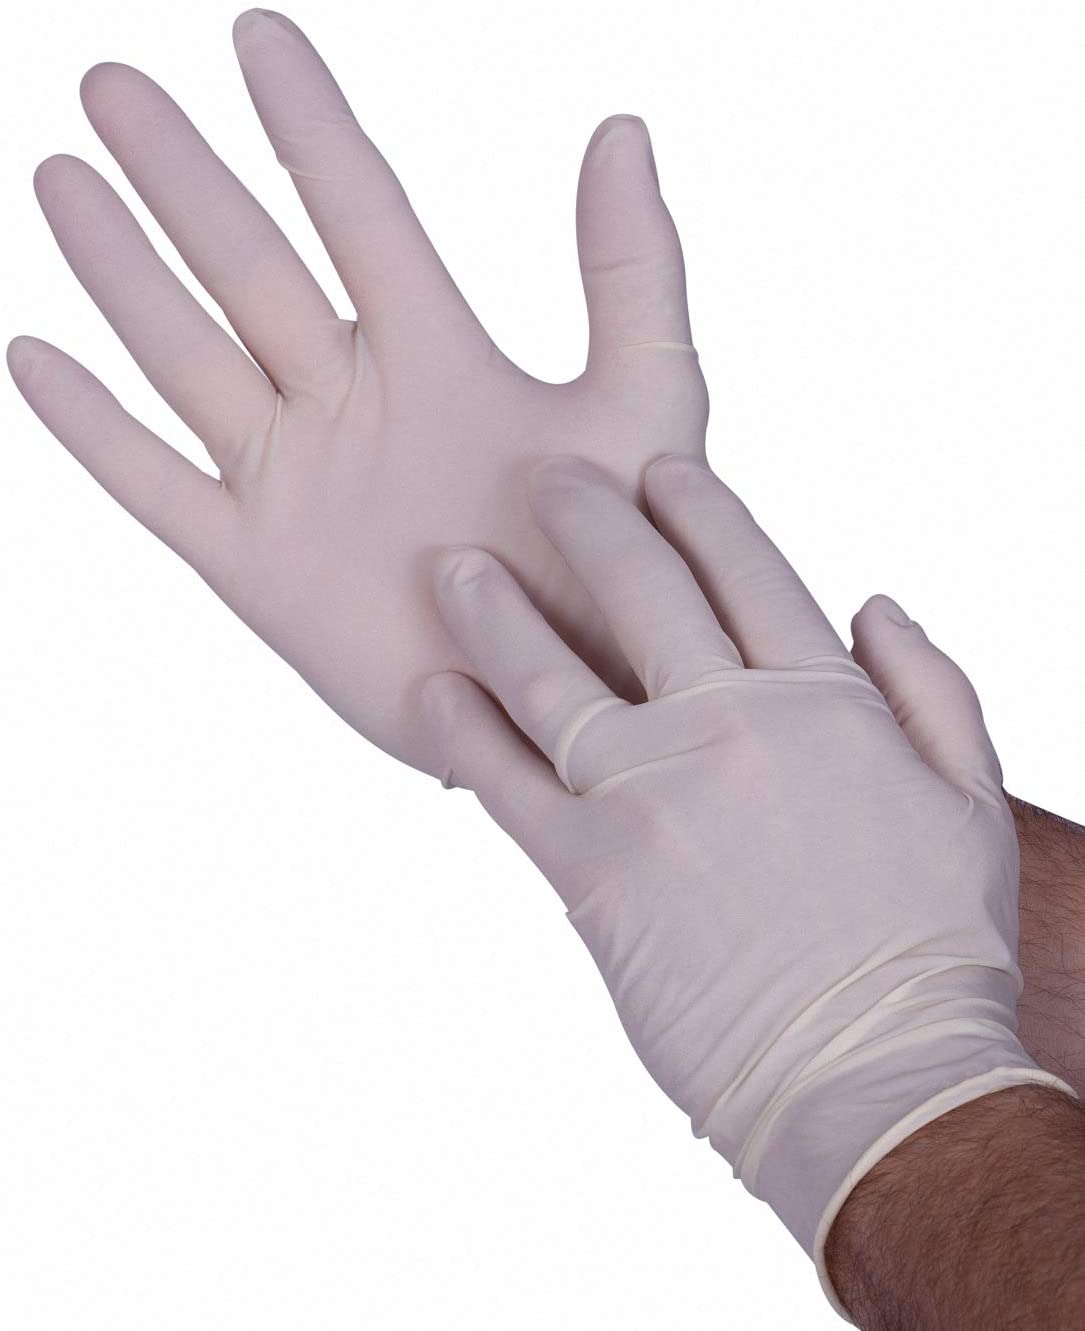 Premium Guard - Latex Gloves LTX1002, 100 Gloves per Box